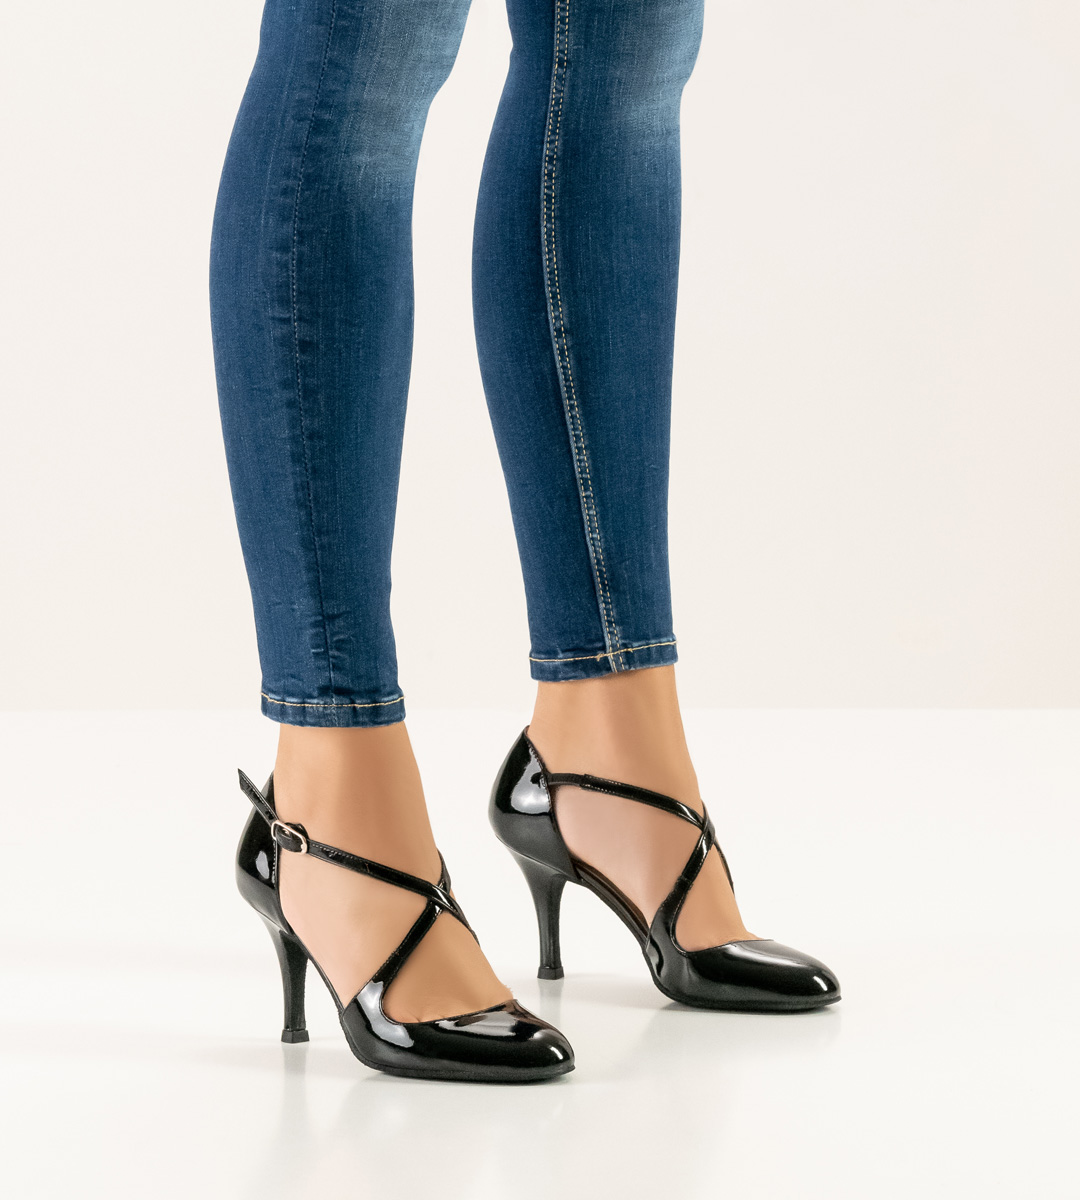 Blue jeans in combination with 8 cm high Nueva Epoca ladies dance shoe